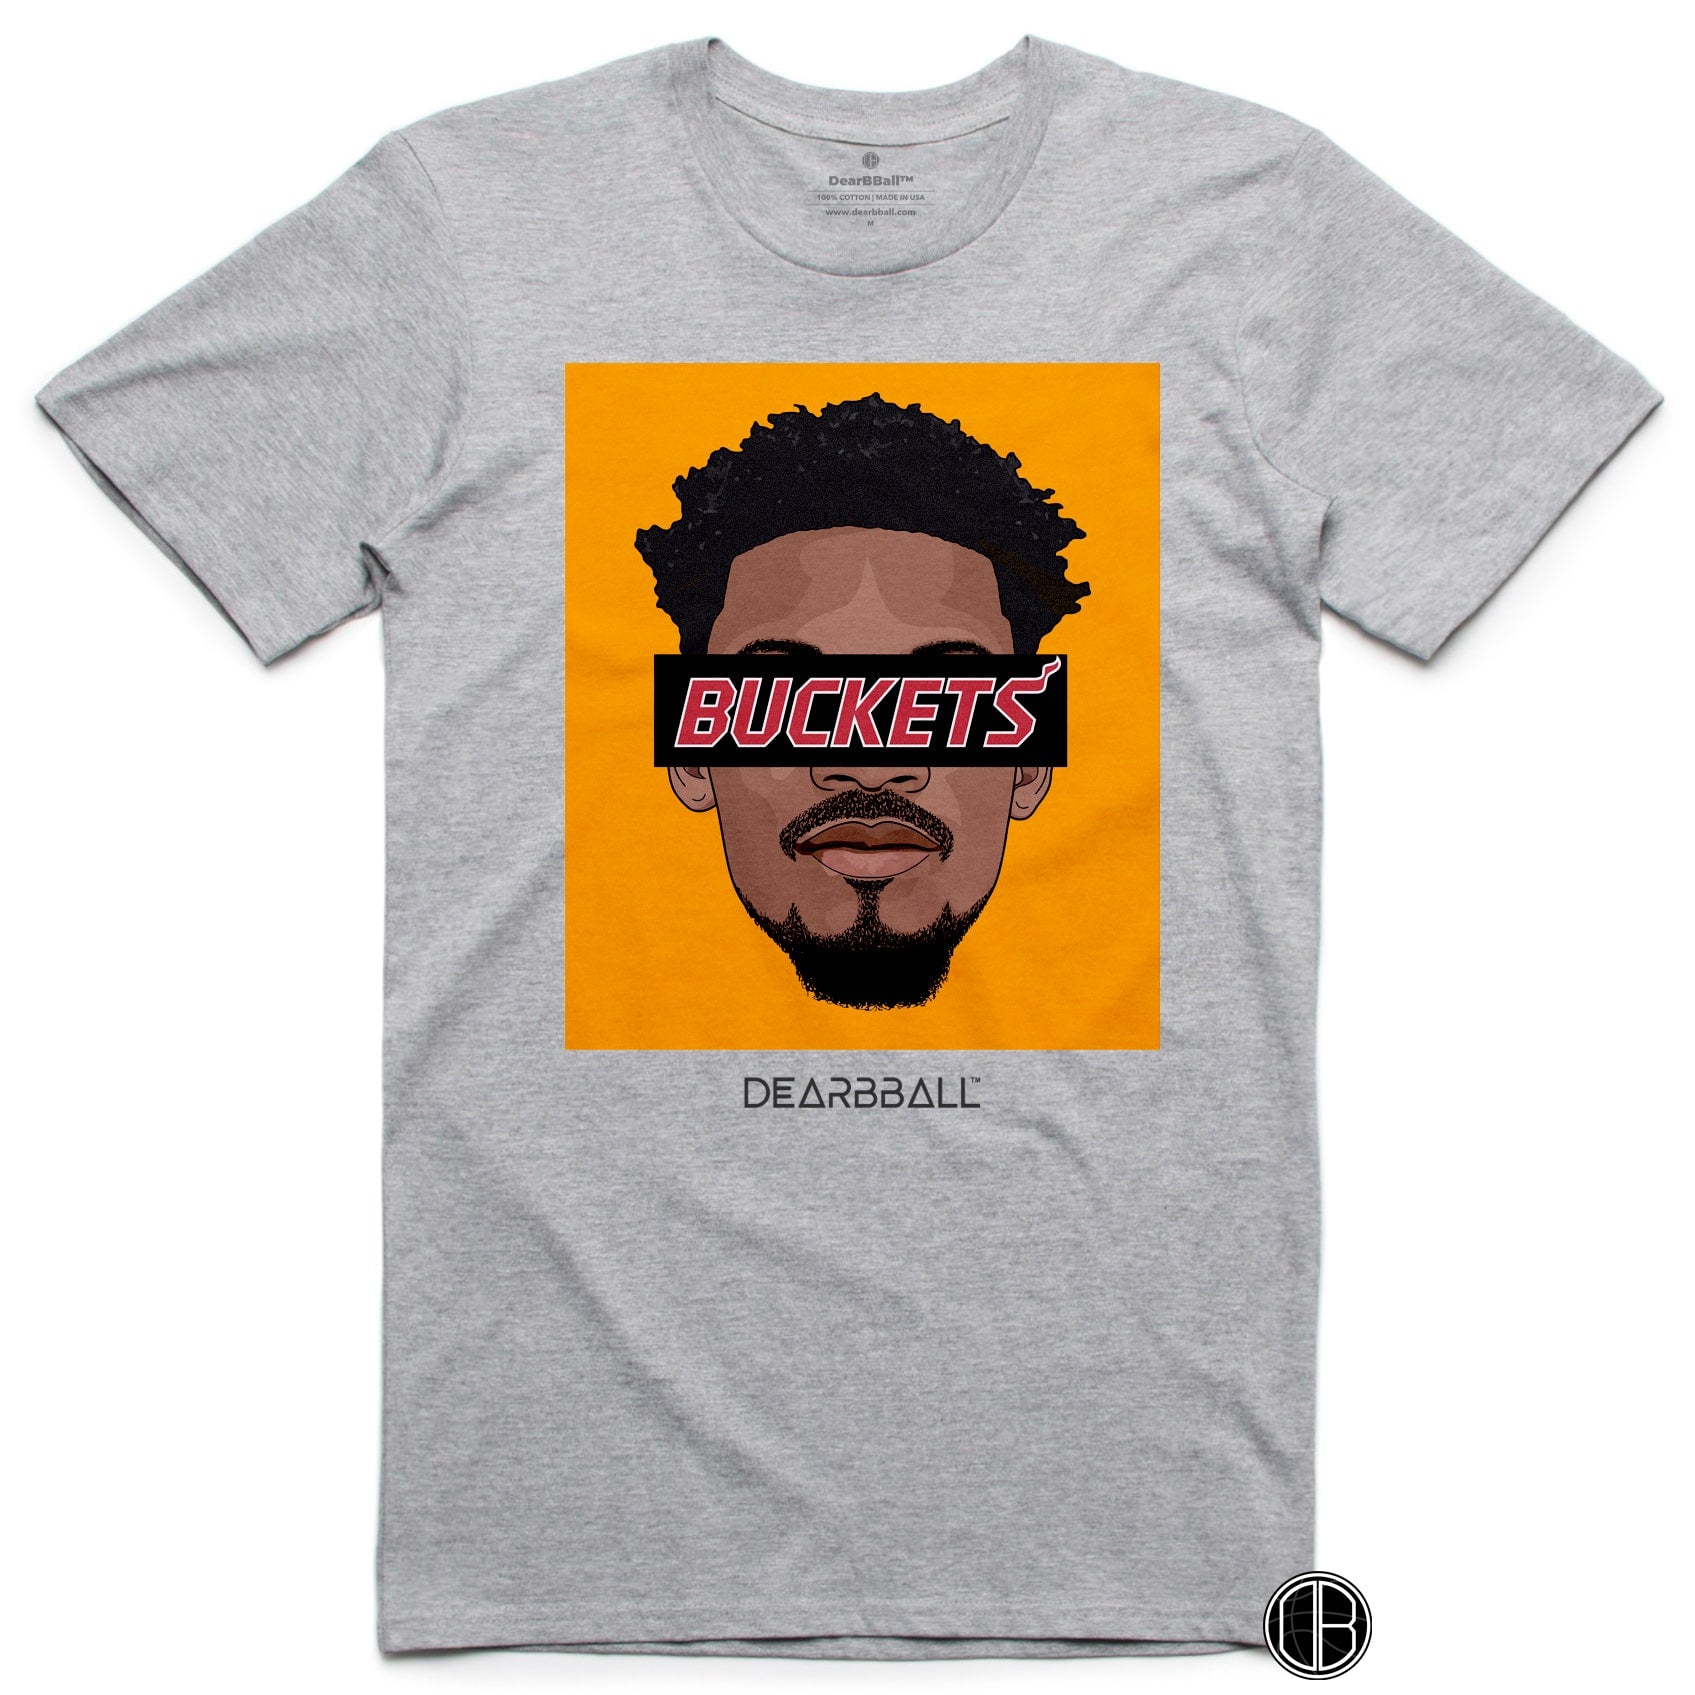 Jimmy-Butler-T-shirt-Buckets-Miami-Heat-Limited-Edition-Heat-Colors-Basketball-Dearbball